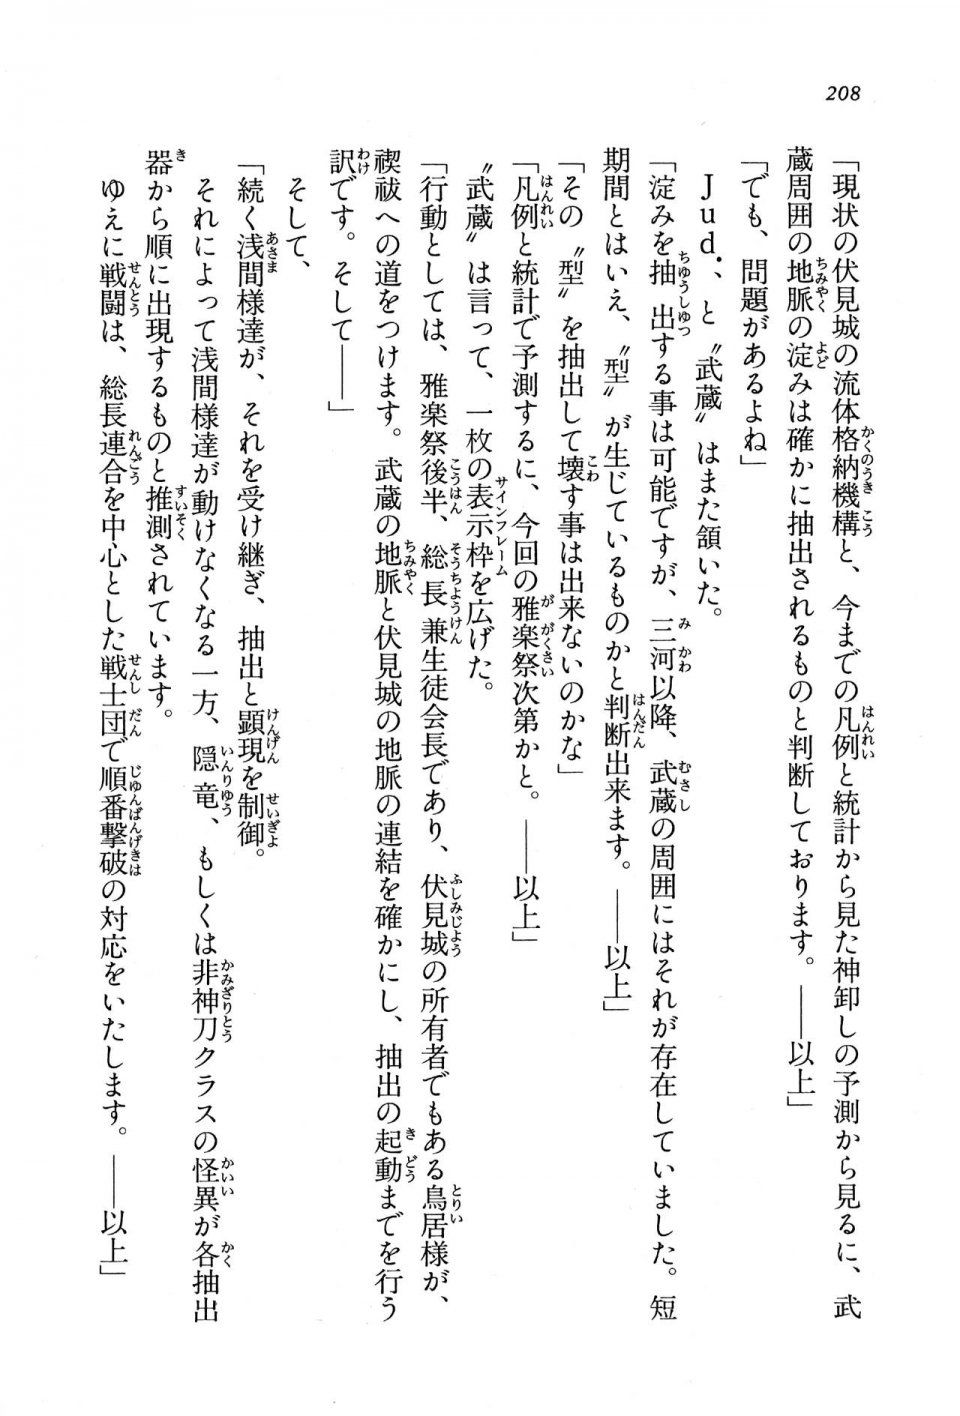 Kyoukai Senjou no Horizon BD Special Mininovel Vol 8(4B) - Photo #212